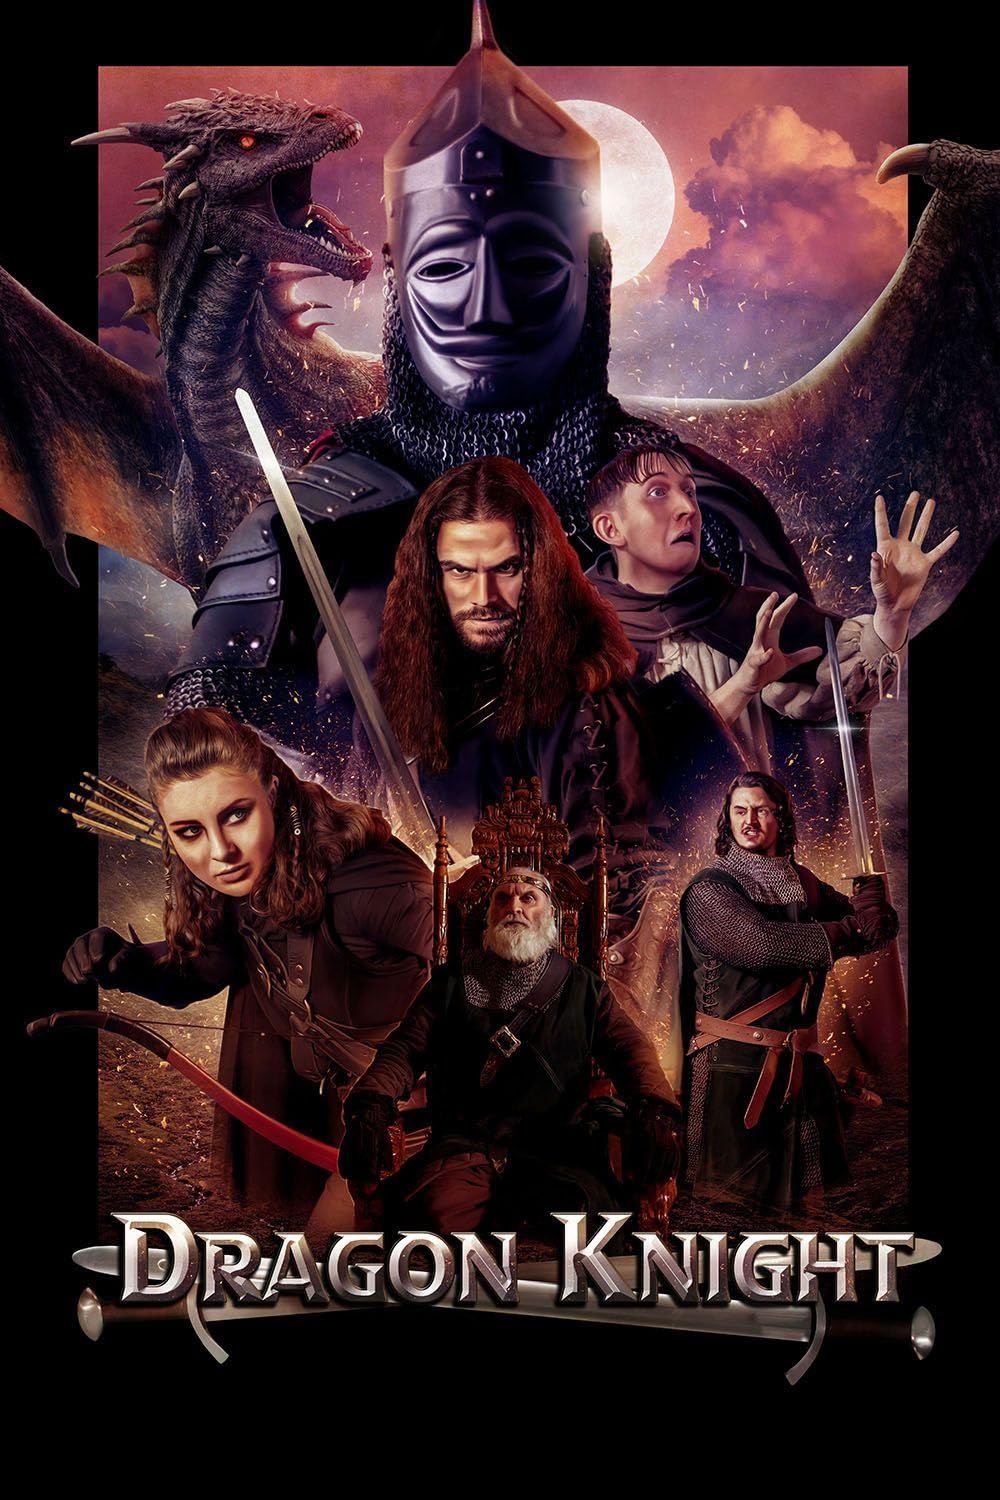 Dragon Knight (2022) Hindi Dubbed Movie download full movie